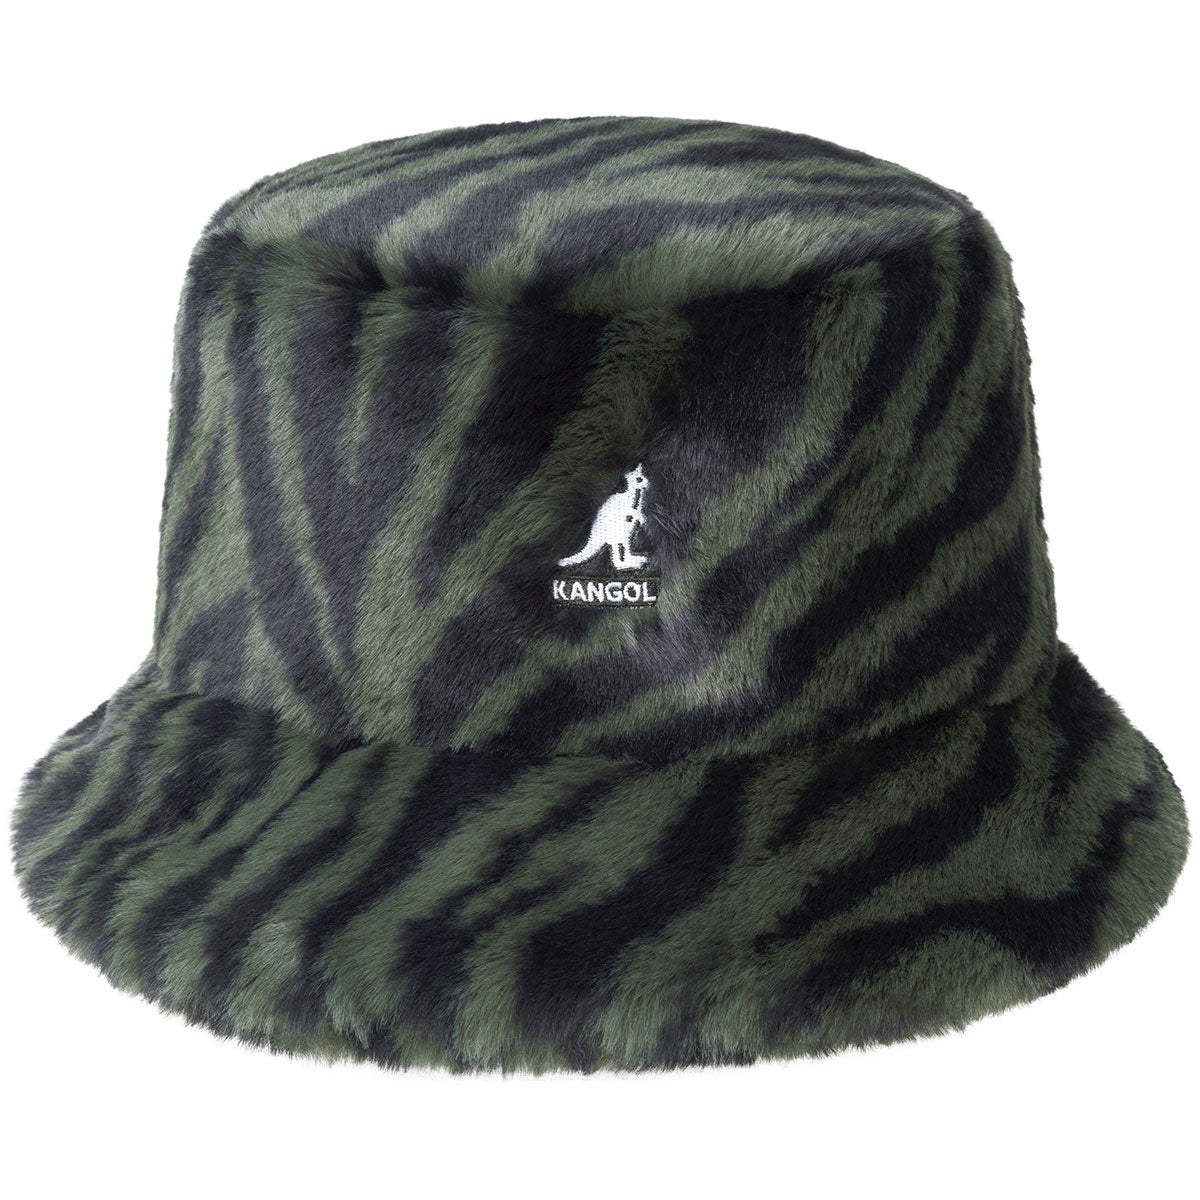 Kangol Faux Fur Bucket Hat - Olive Zebra